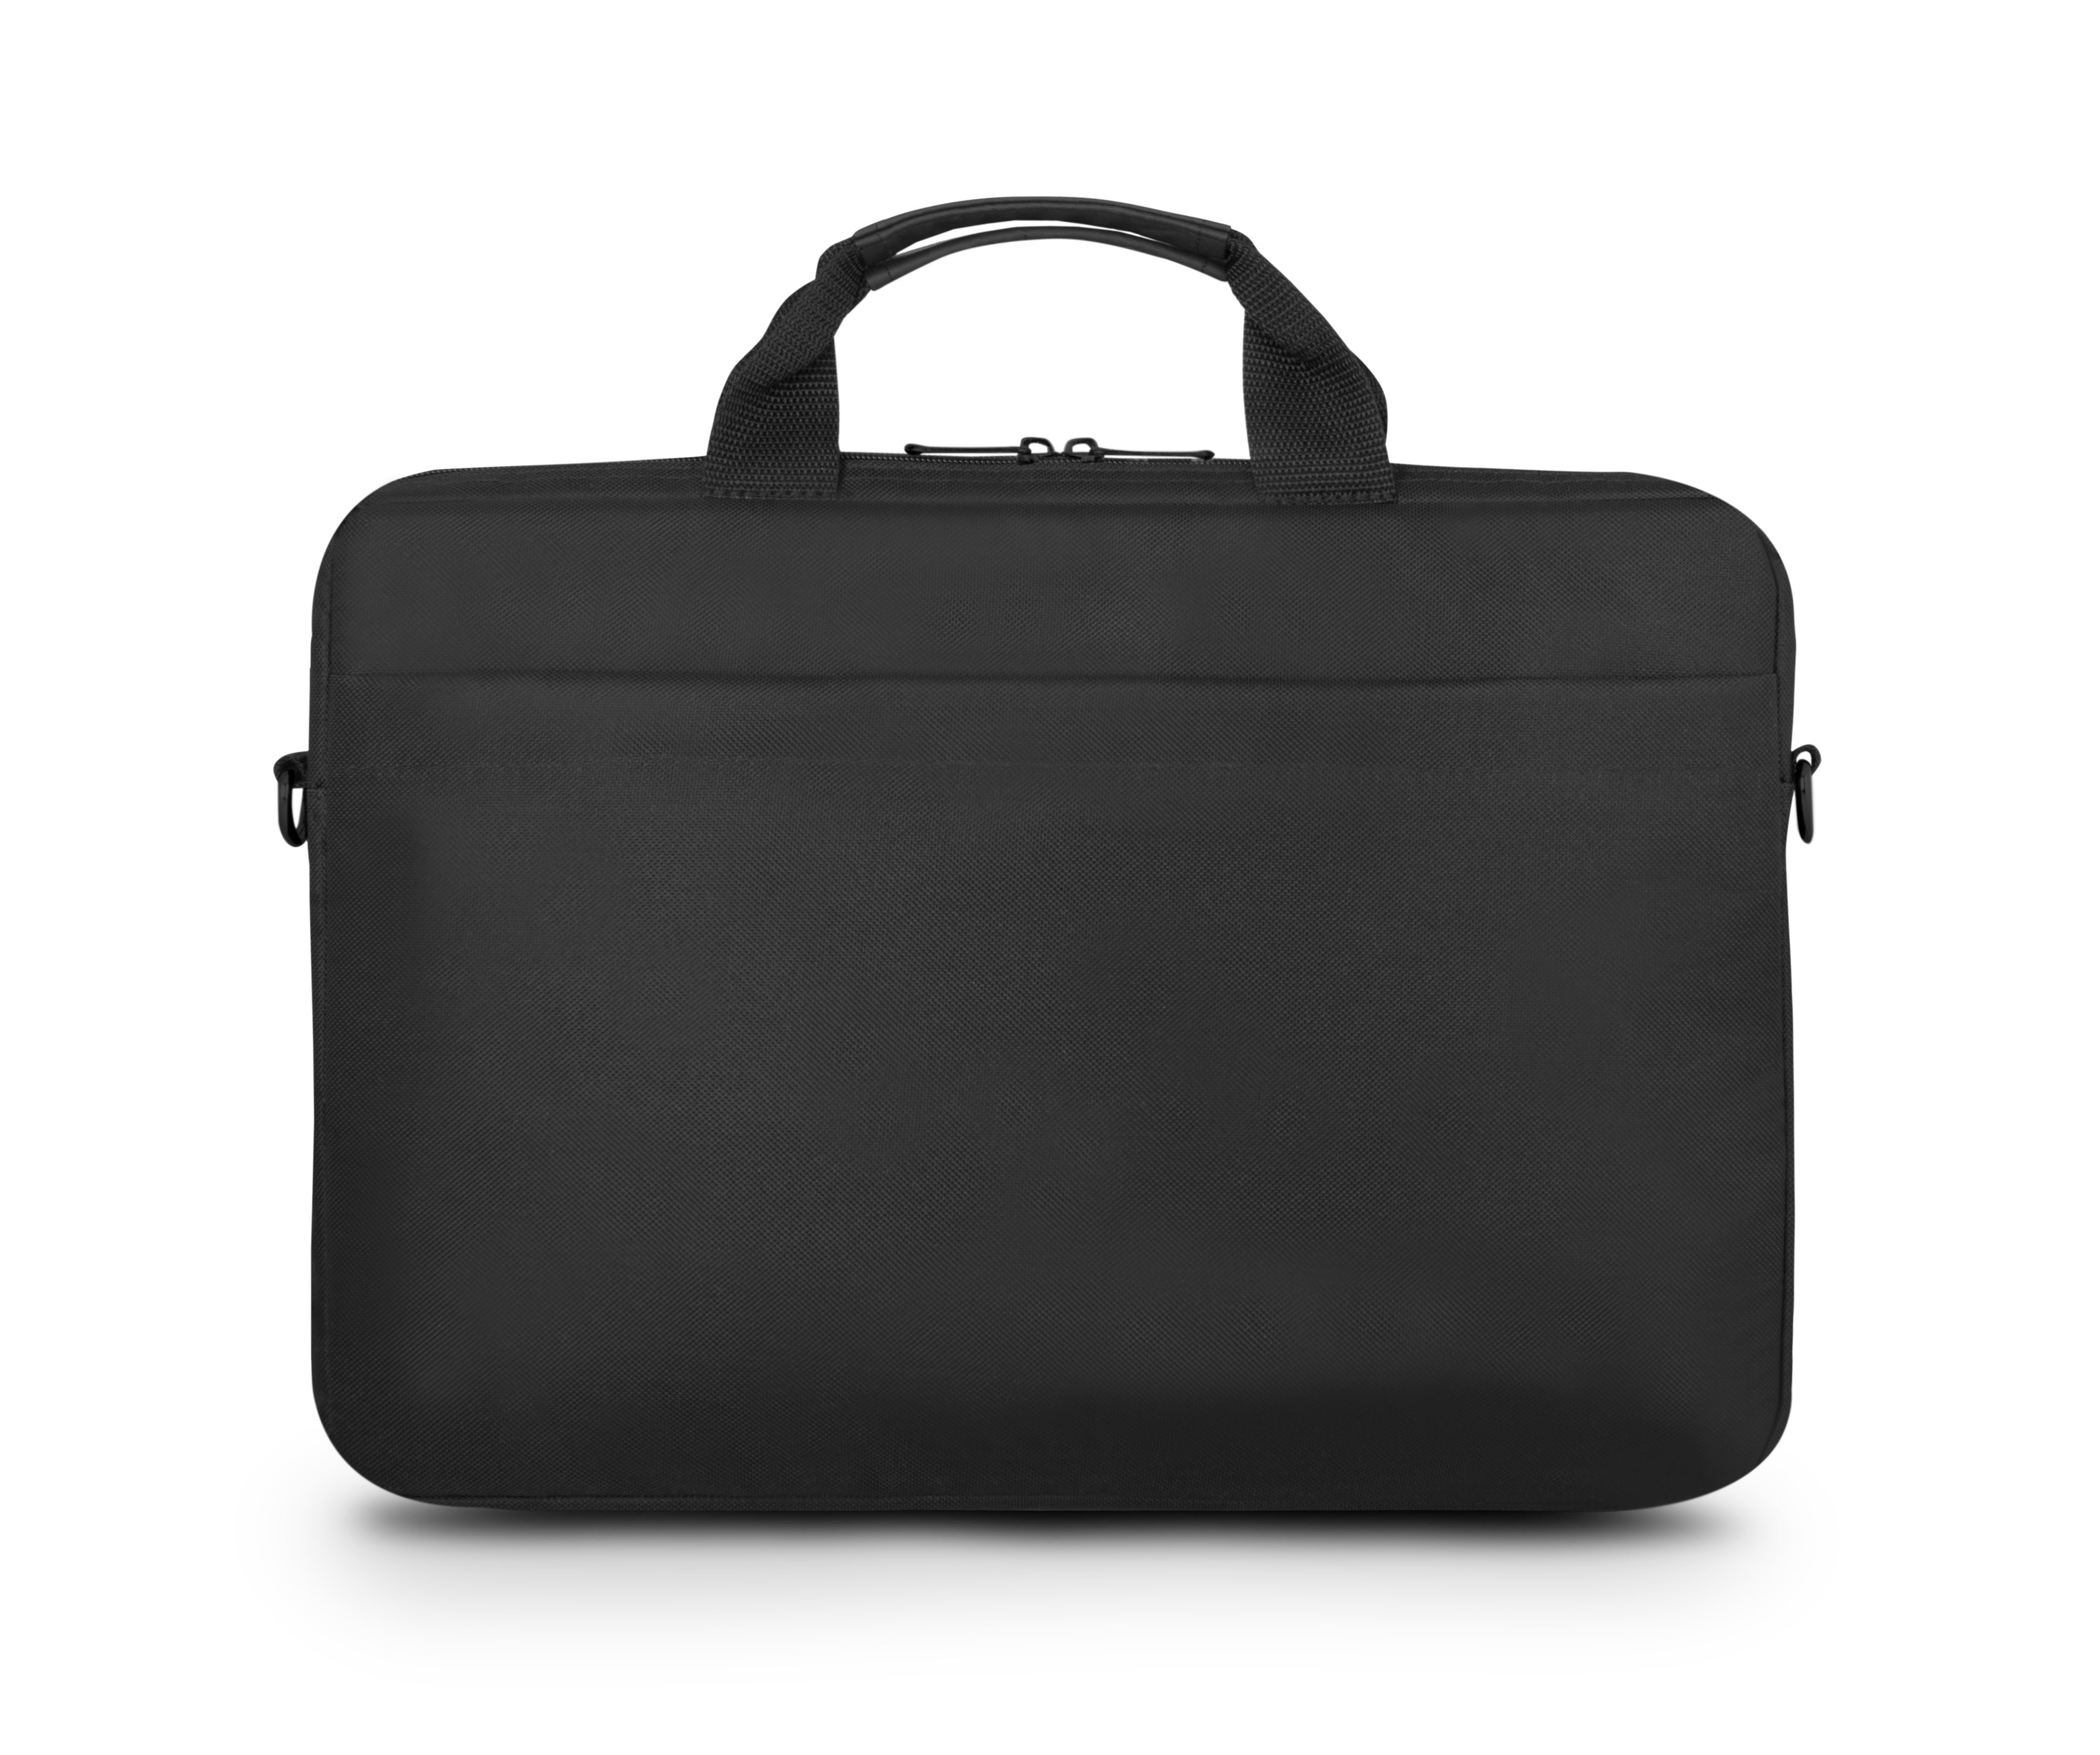 Urban Factory - Accessories      Toplight Toploading Lptop Bag       12.5in Black                        Tlc02uf